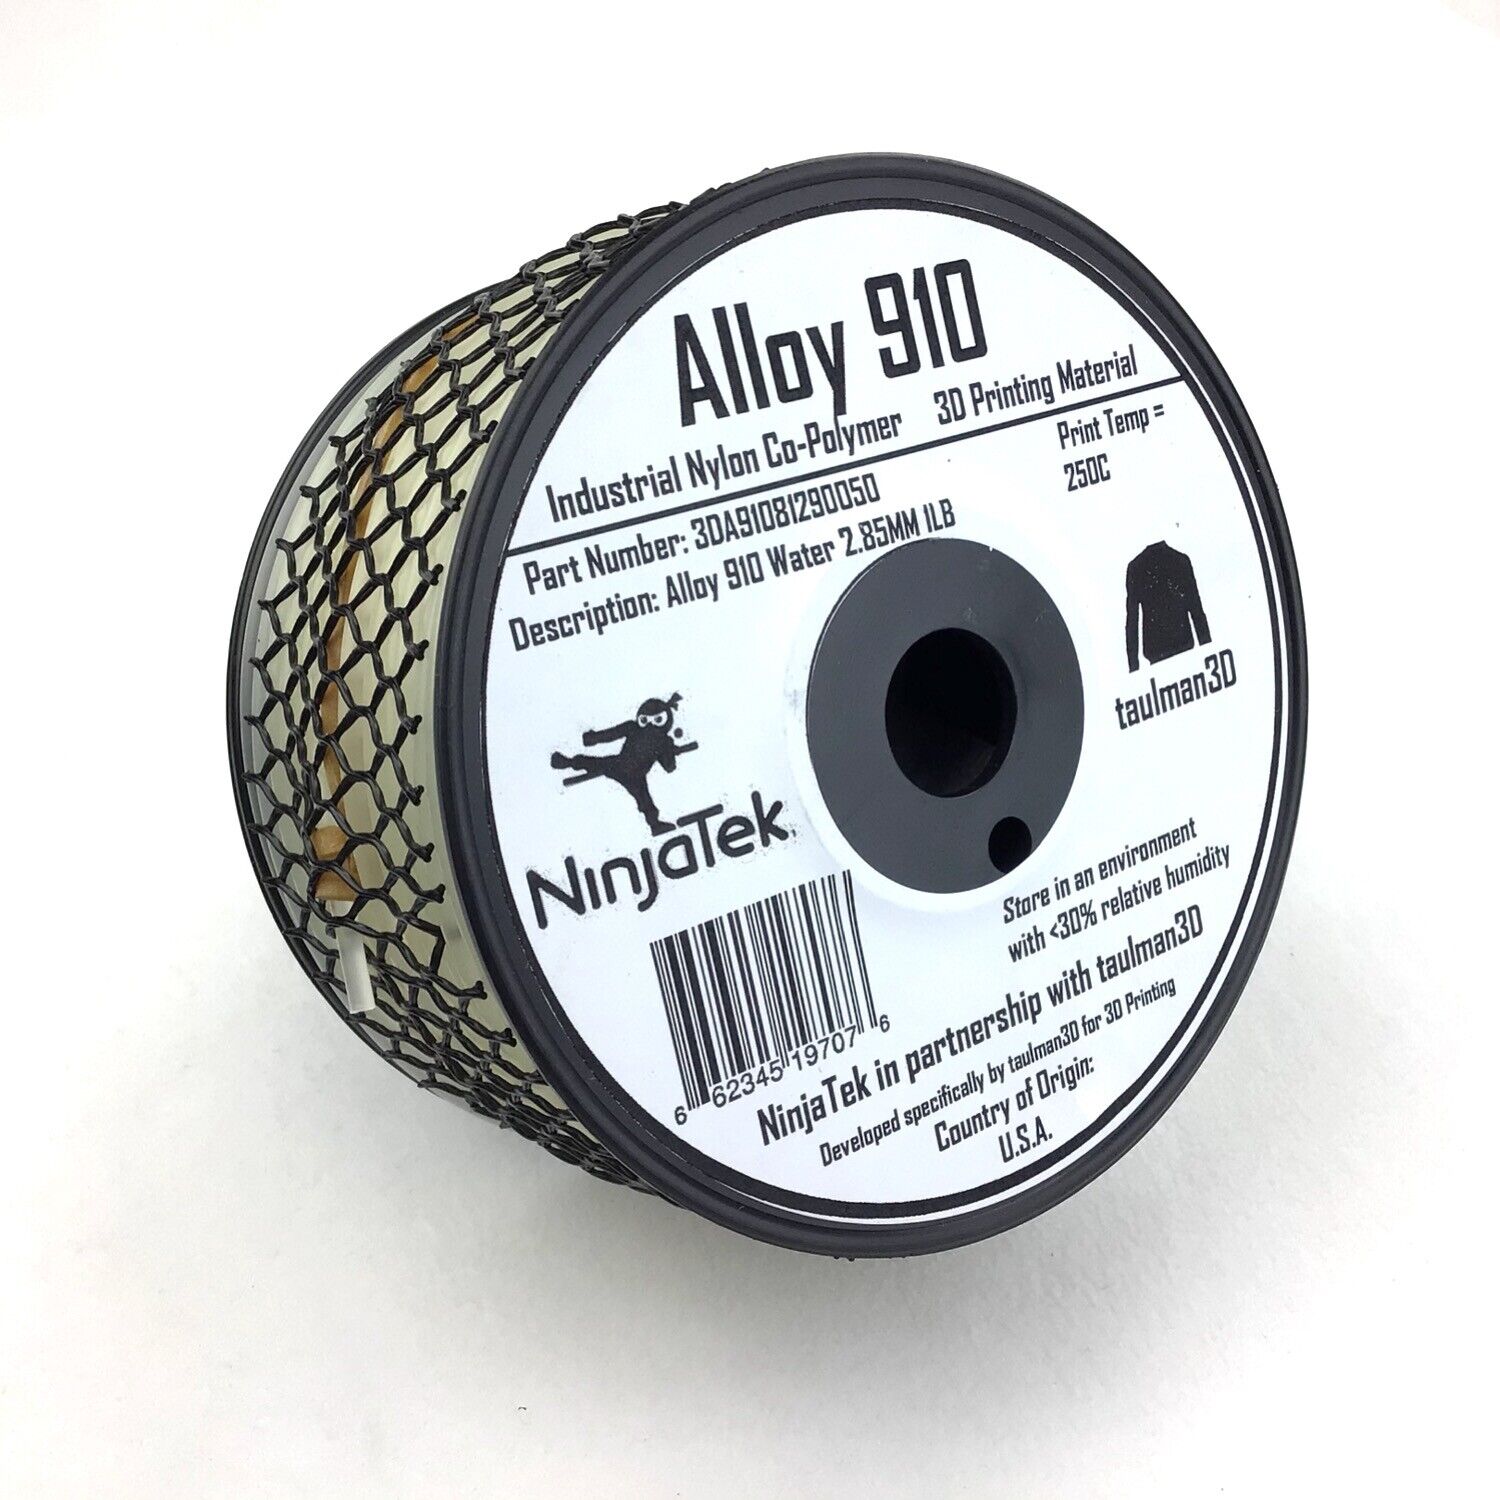 [3DMakerWorld] taulman3D Alloy 910 Filament - 2.85mm, 1lb, Water (5in spool)